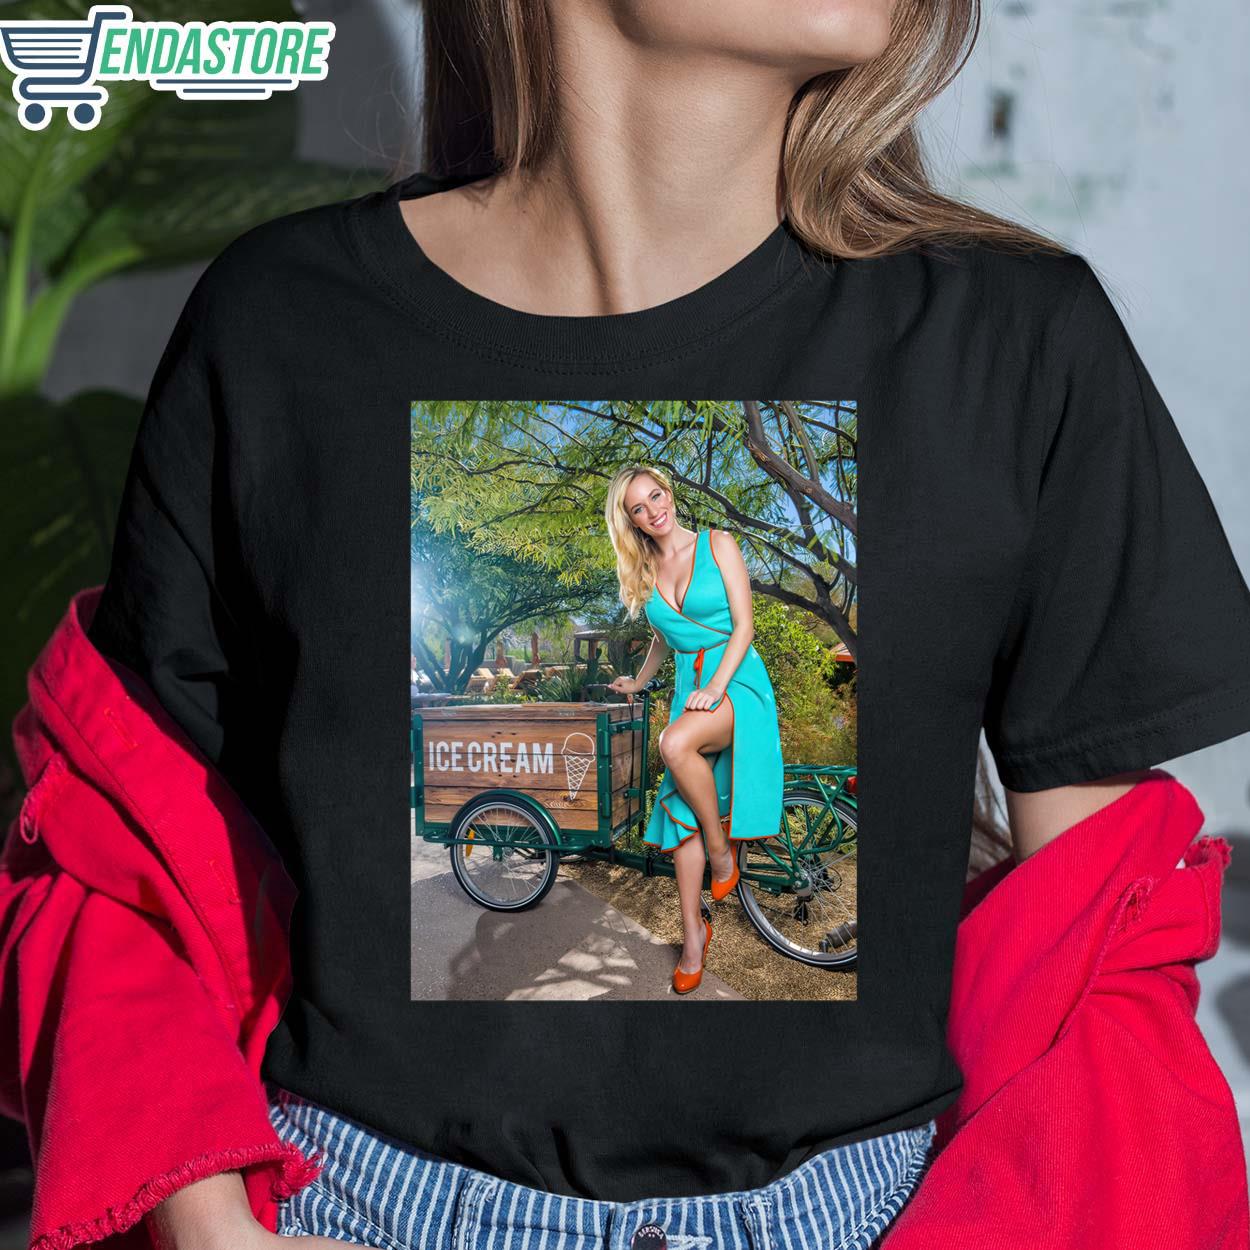 Paige Spiranac Shirt - Endastore.com